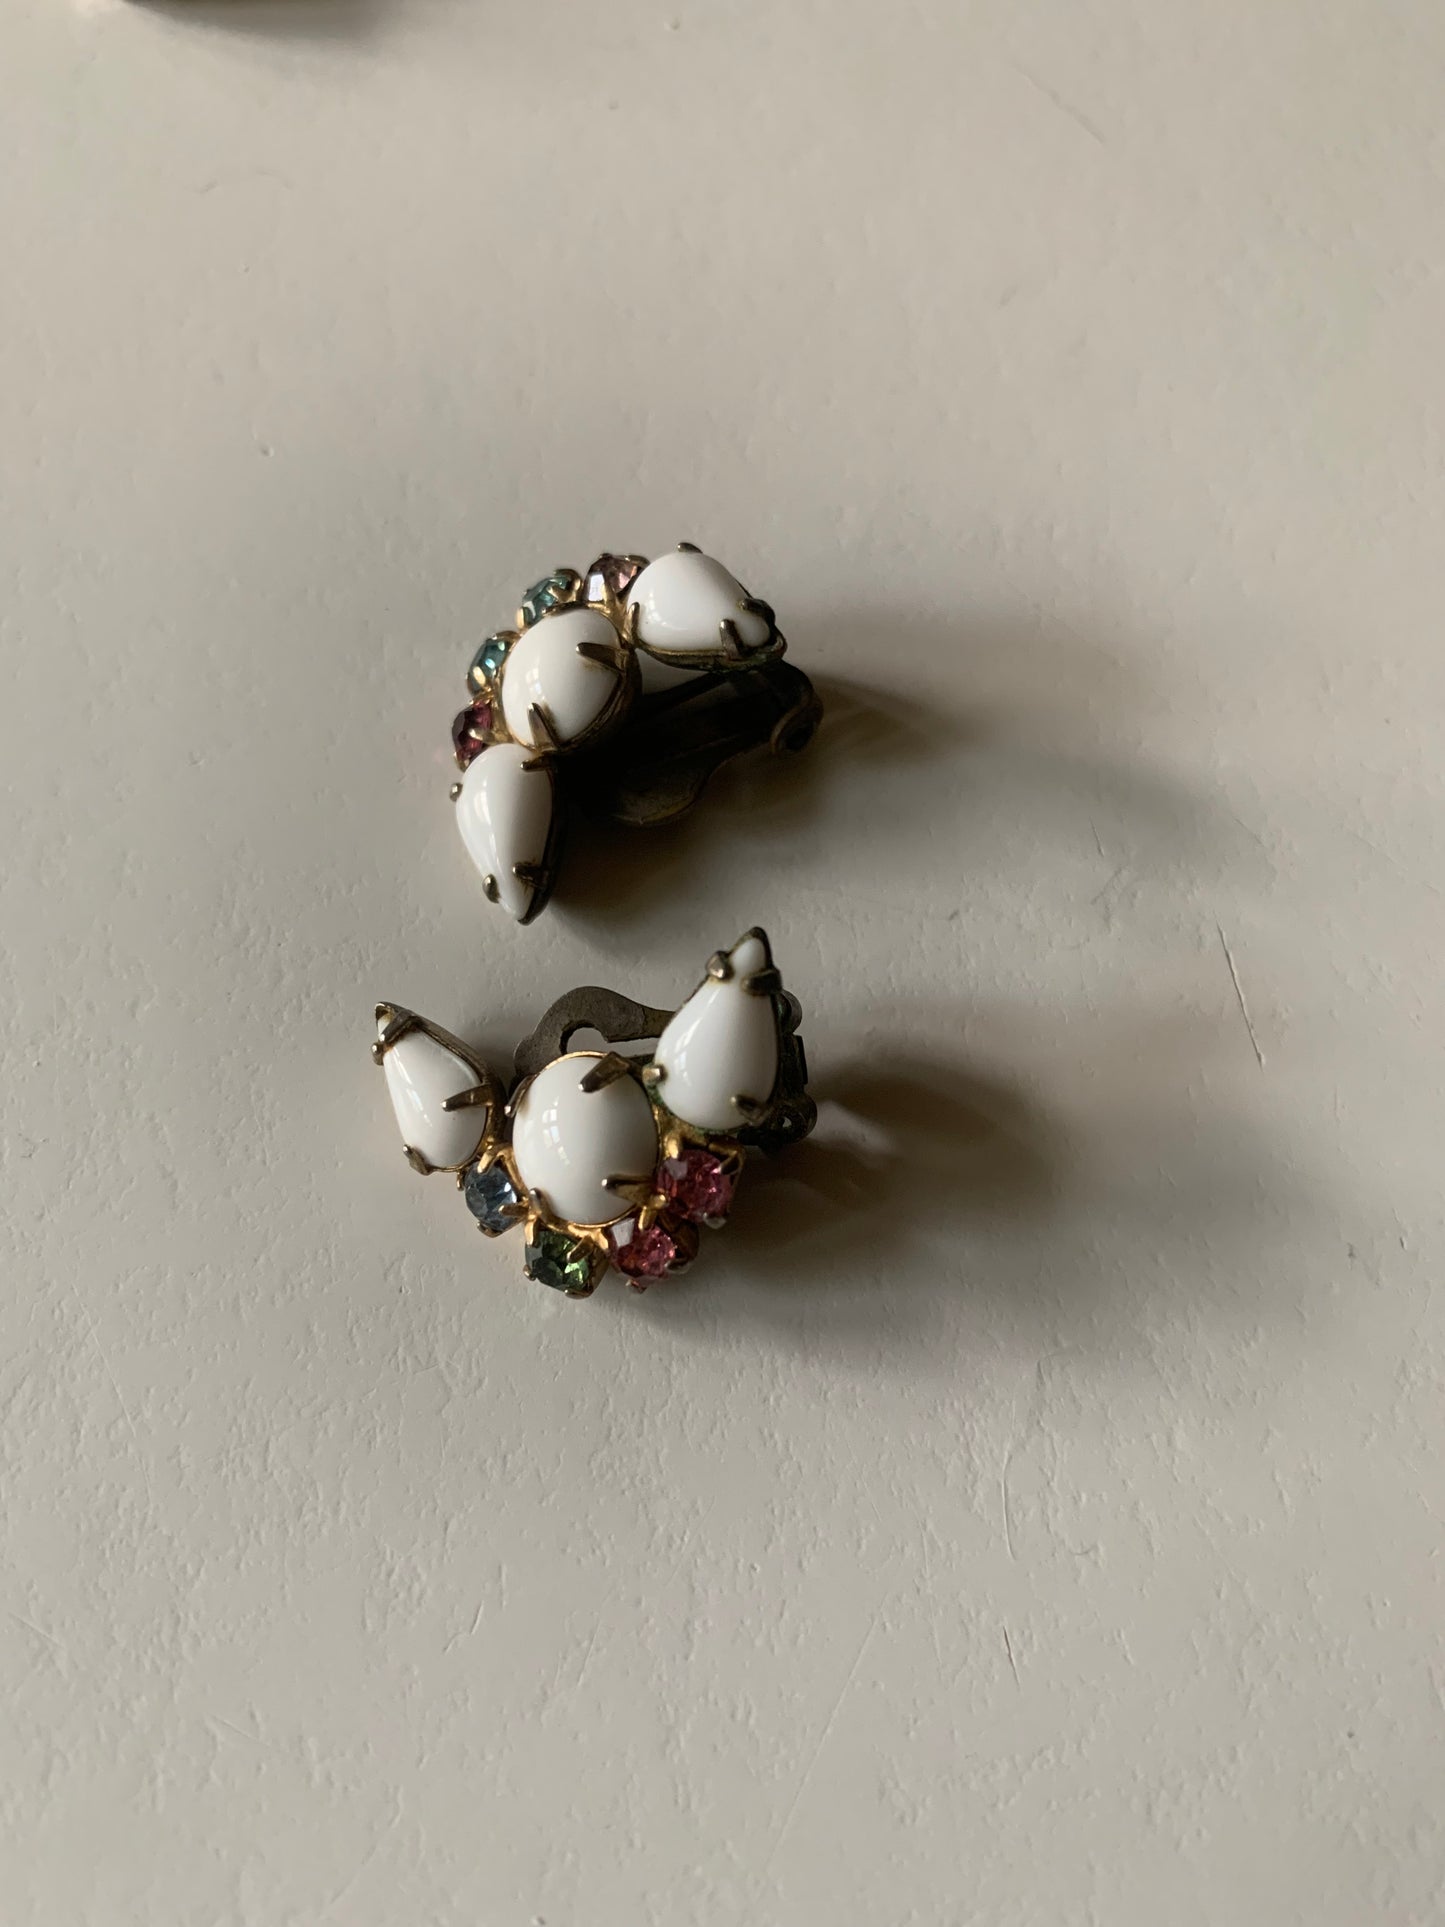 White Glass and Pastel Rhinestone Clip Earrings circa 1950s